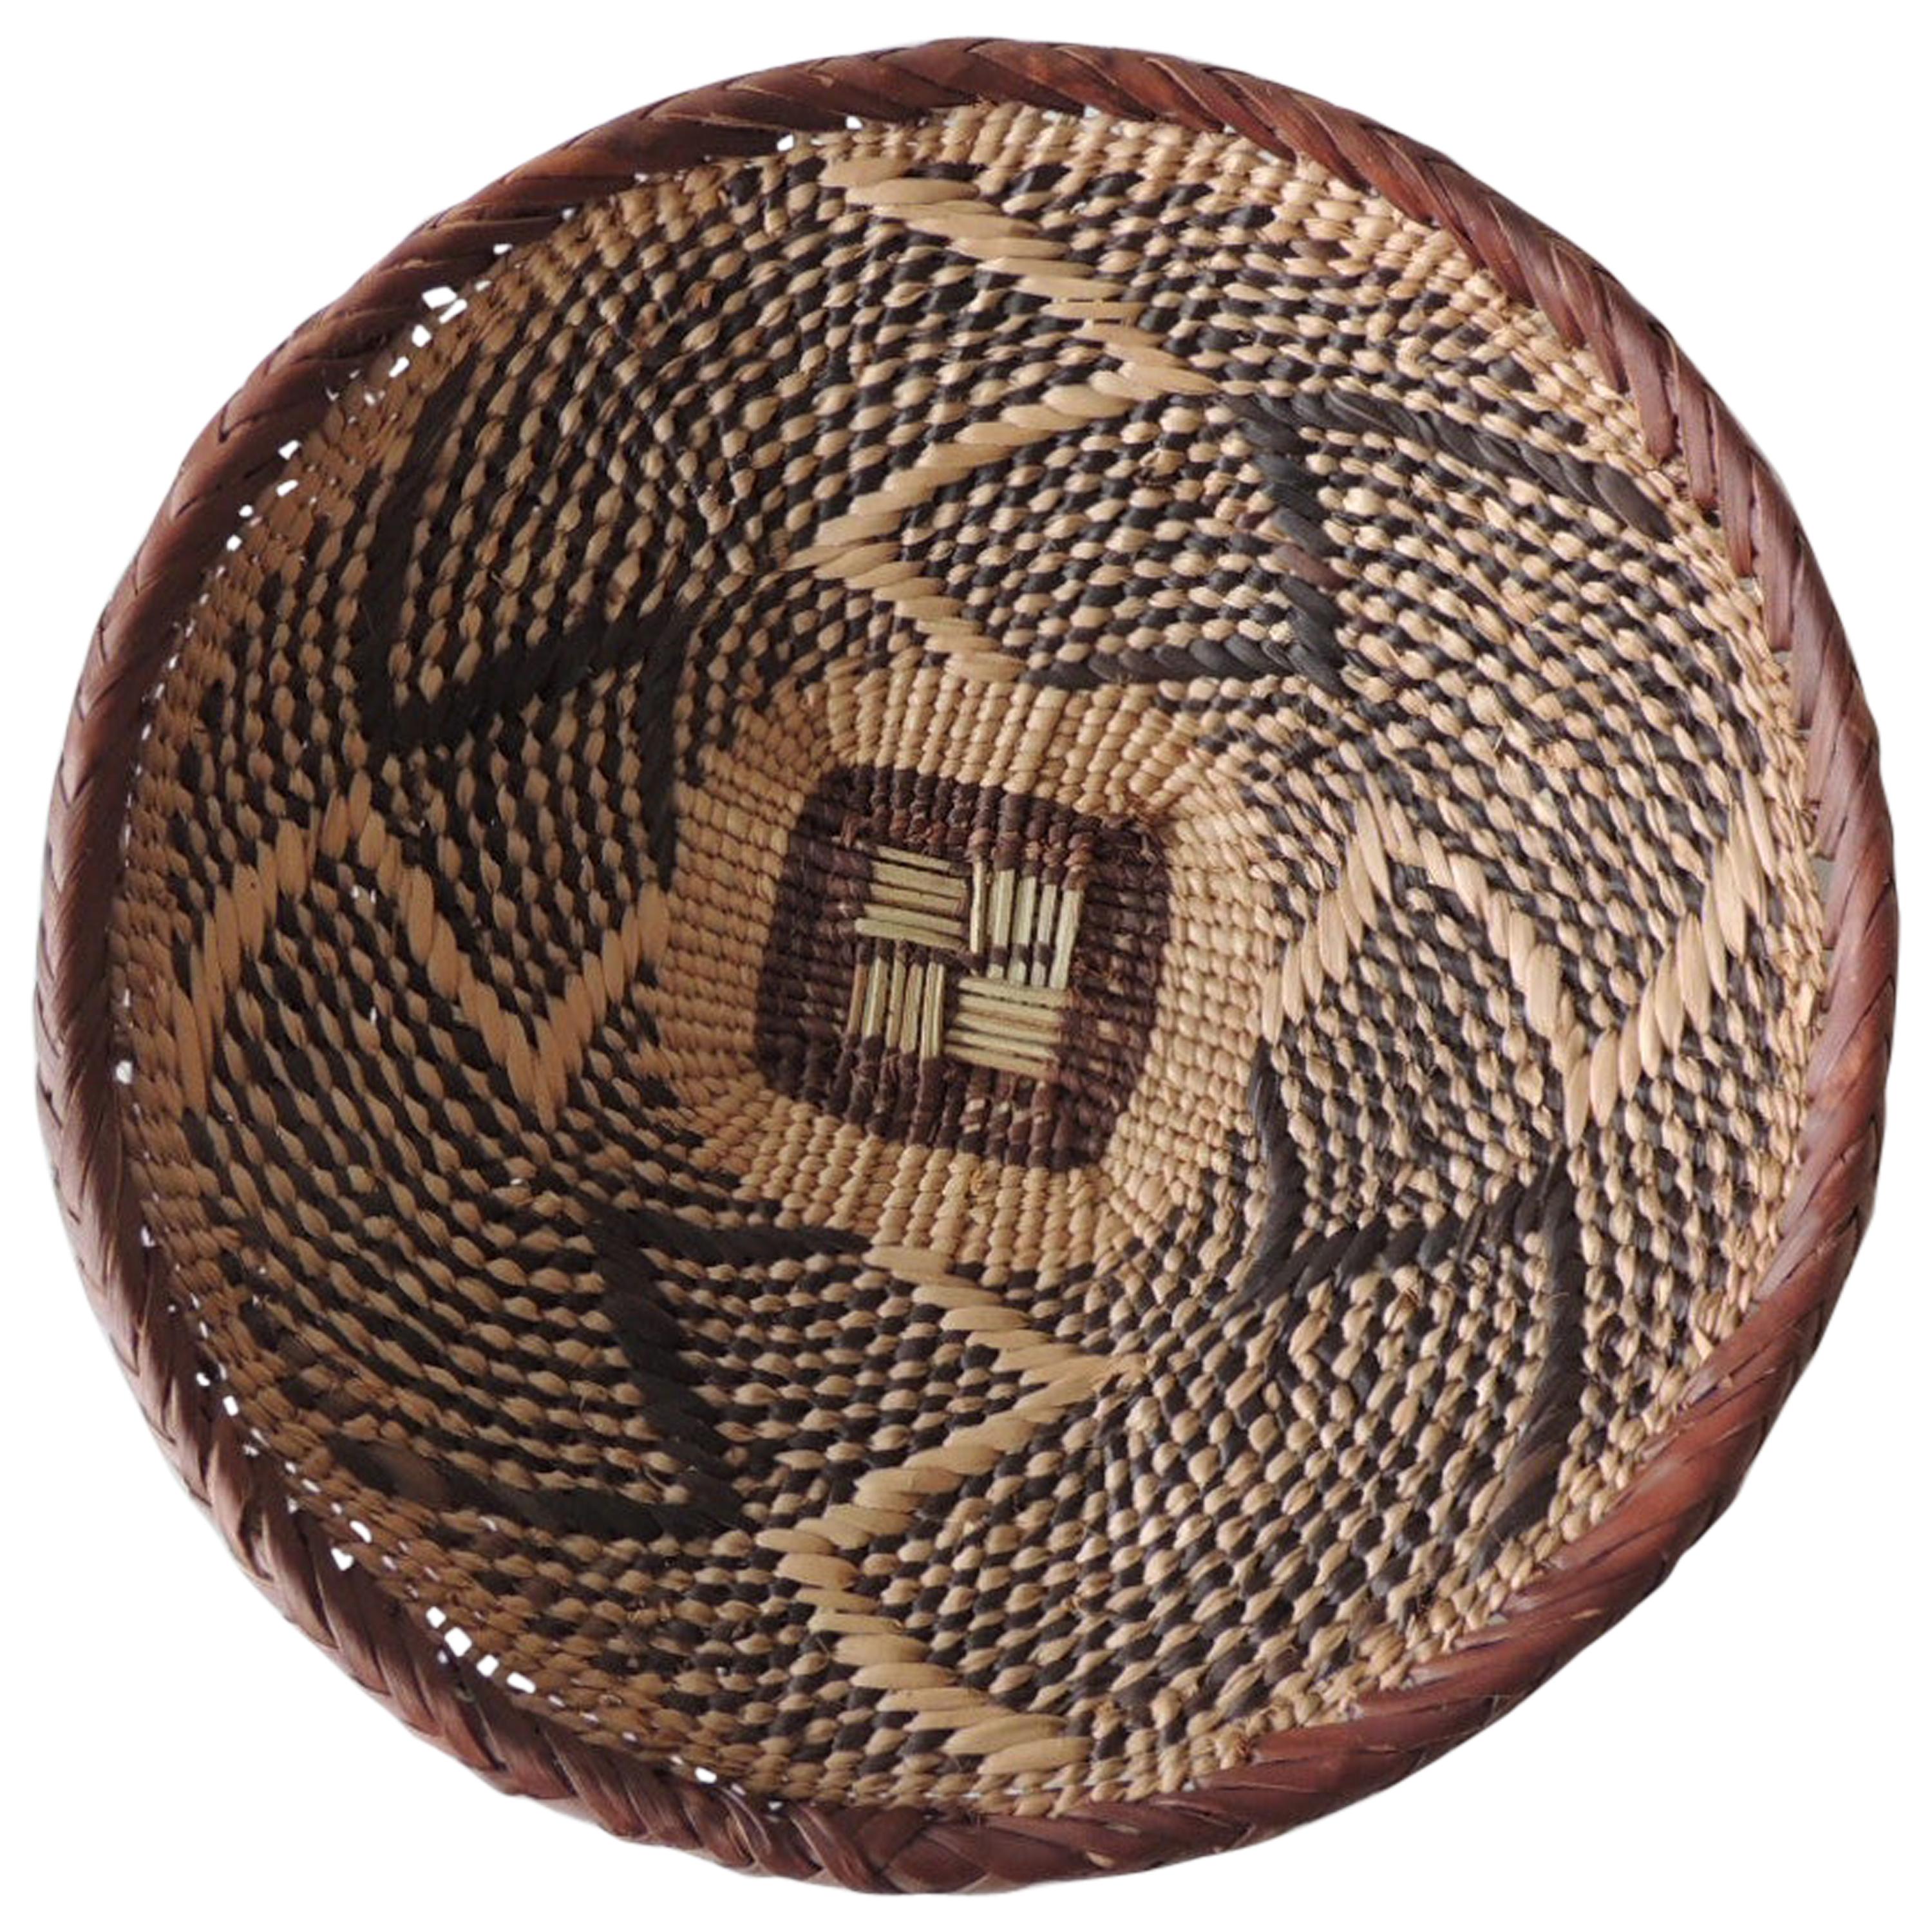 Vintage Natural Fiber Artisanal Small Round African Basket